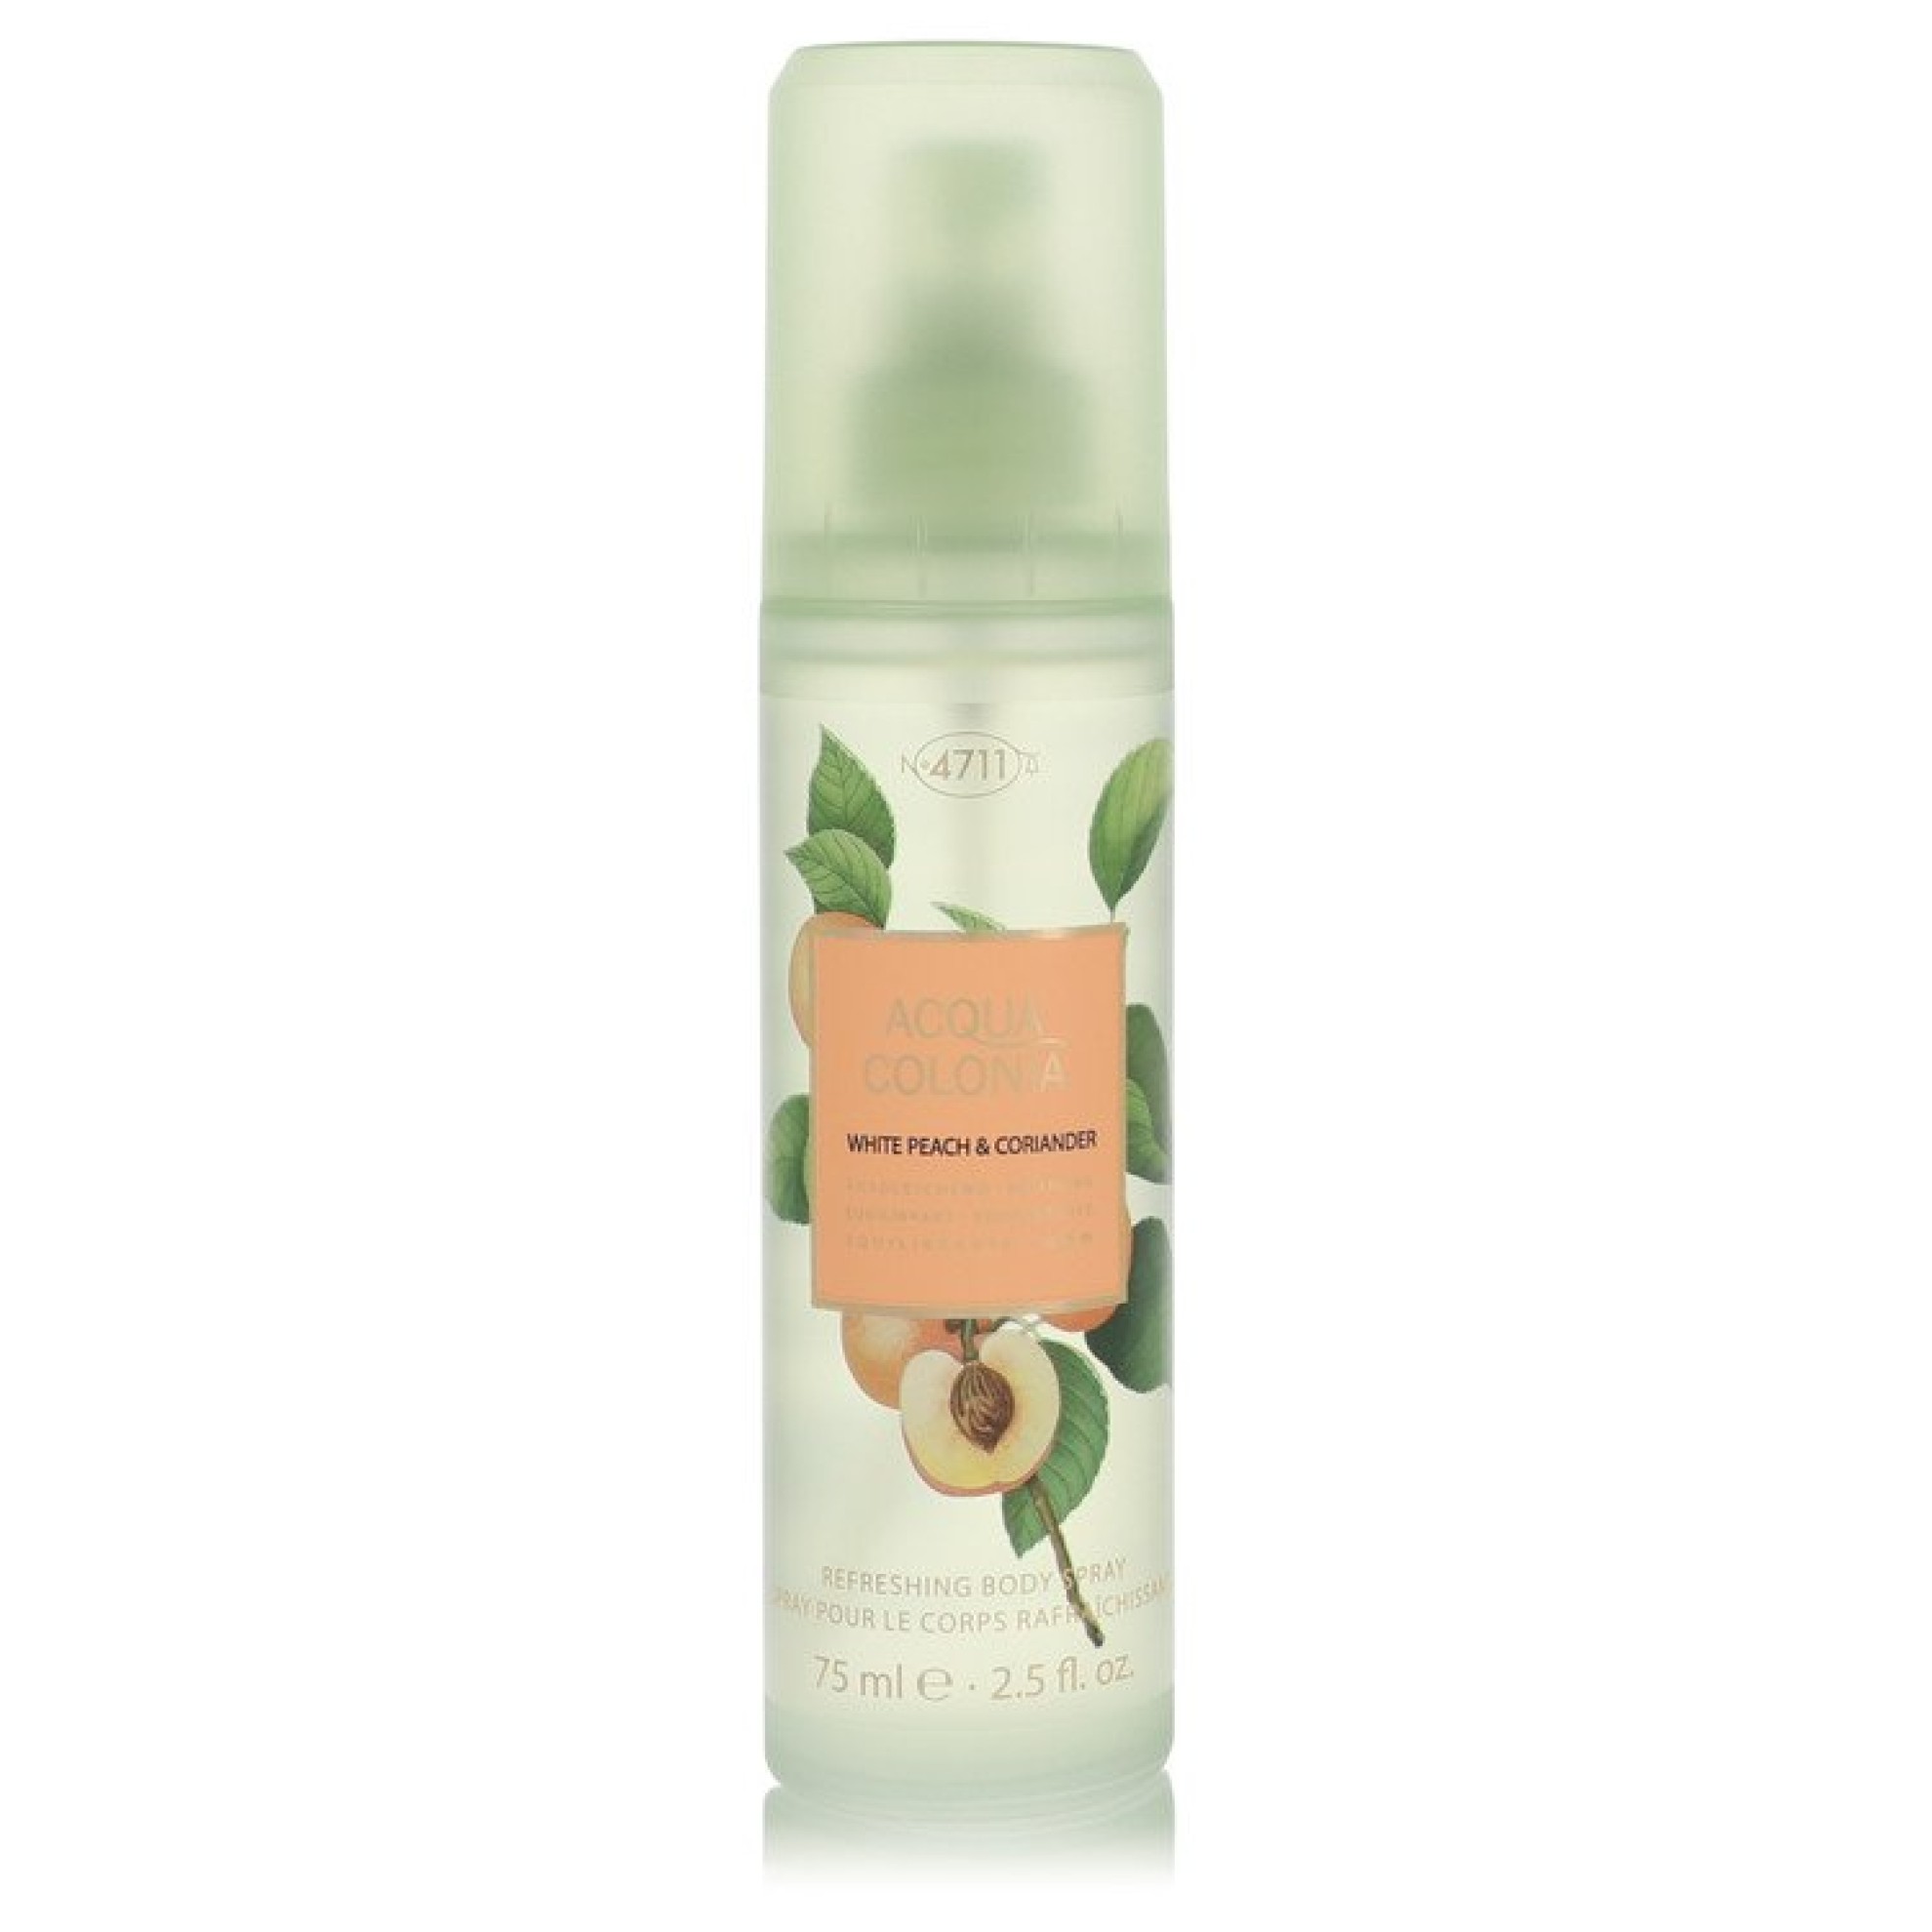 Image of 4711 Acqua Colonia White Peach & Coriander Body Spray 73 ml von XXL-Parfum.ch